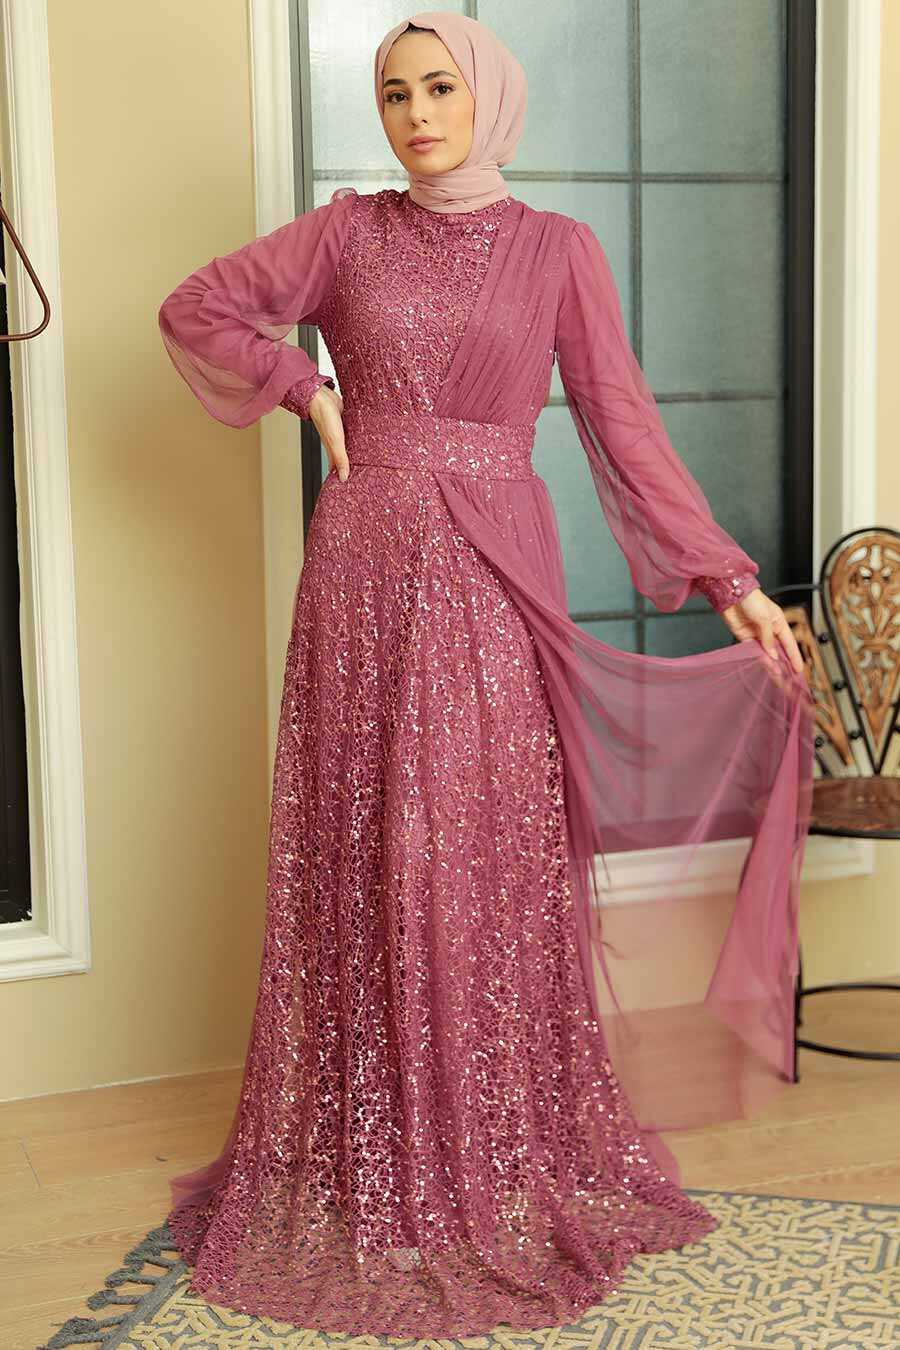 Neva Style - Modern Dusty Rose Muslim Wedding Gown 5696GK